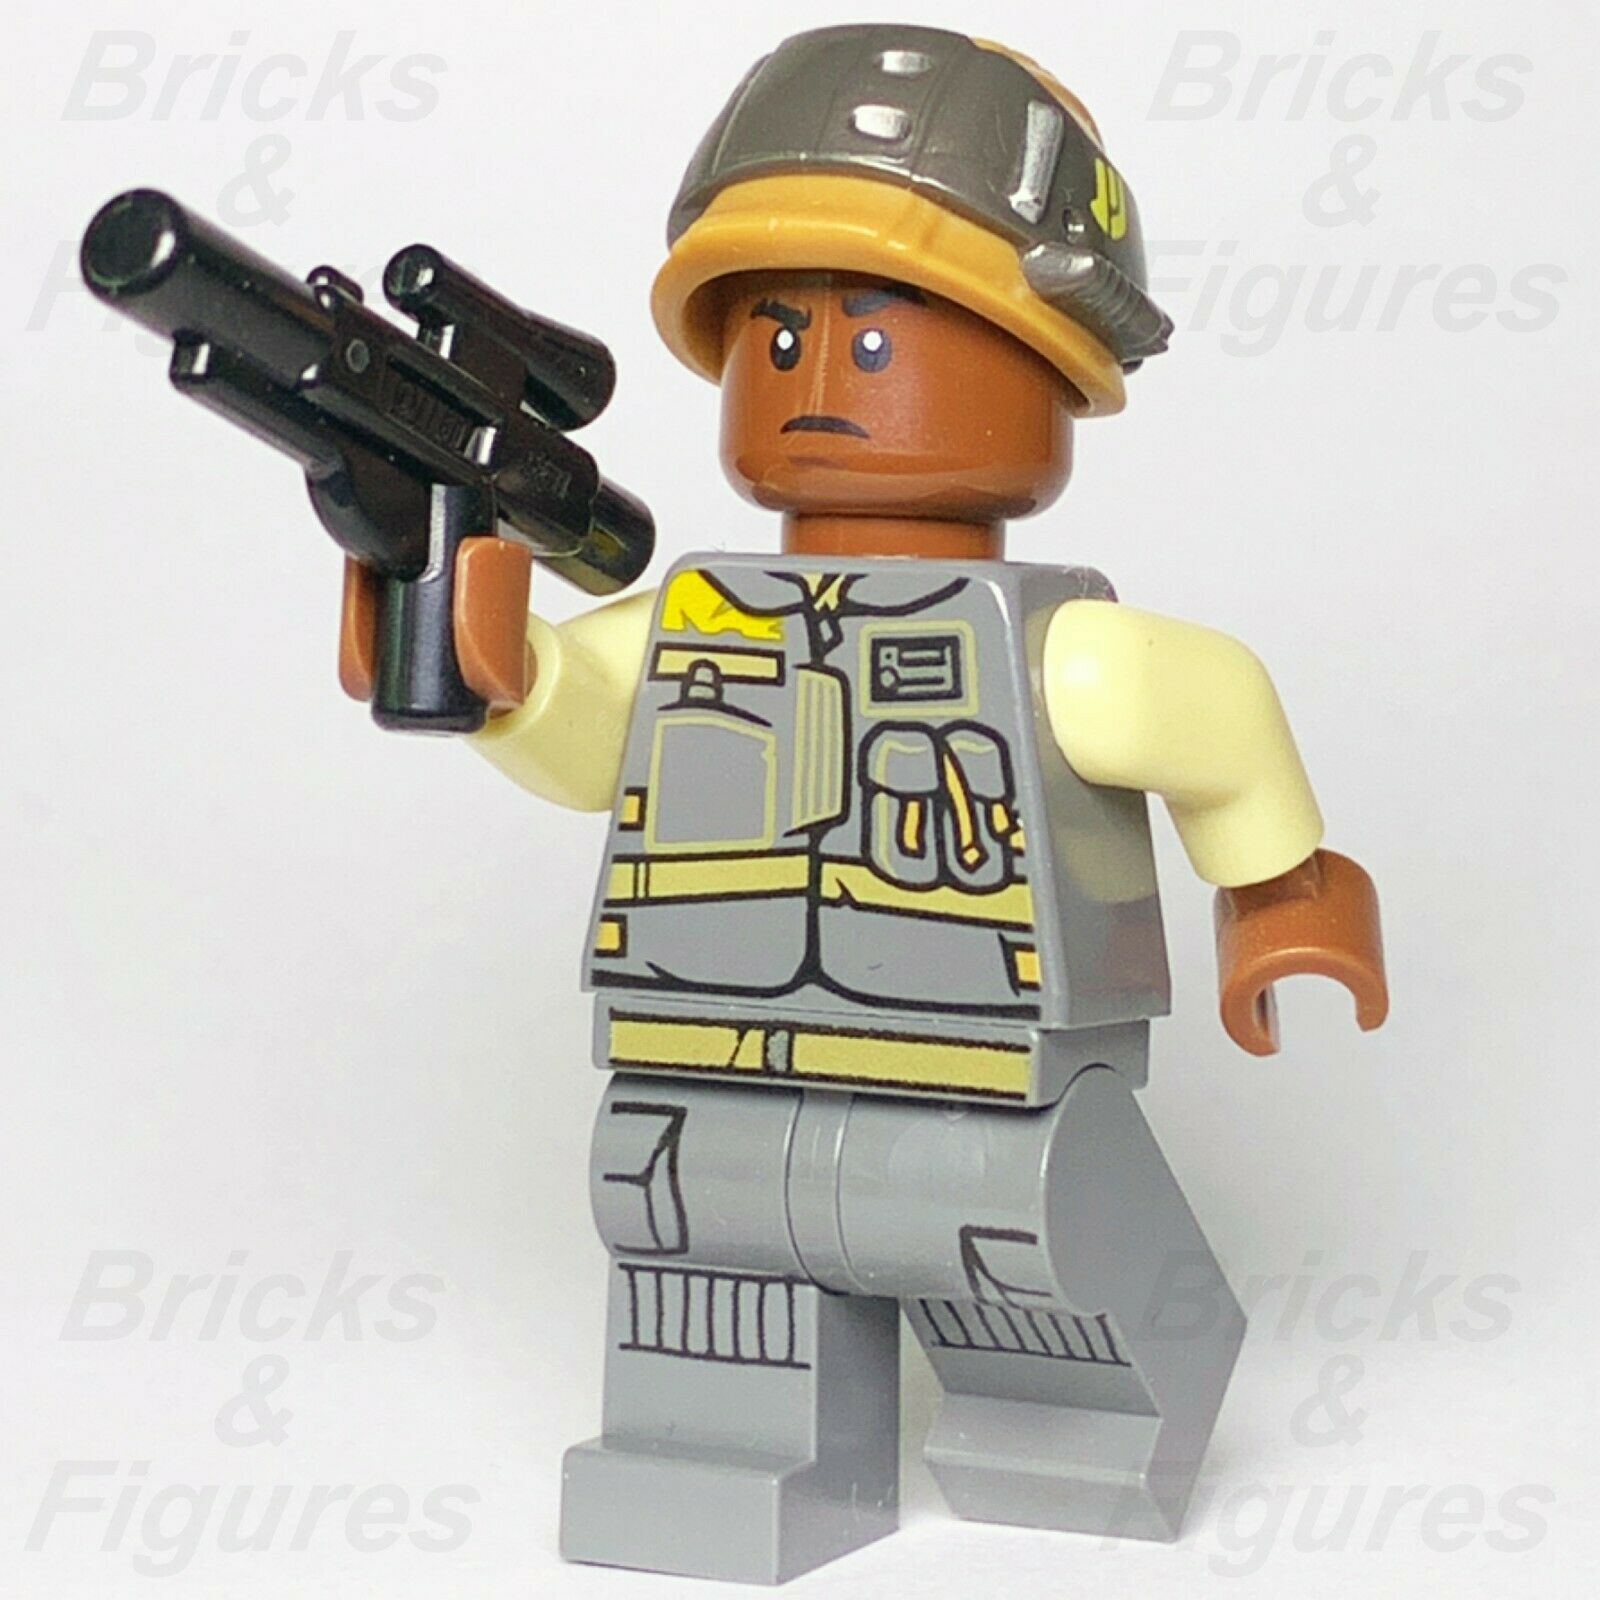 New Star Wars LEGO Corporal Tonc Rebel Trooper Rogue One Minifigure 75164 - Bricks & Figures